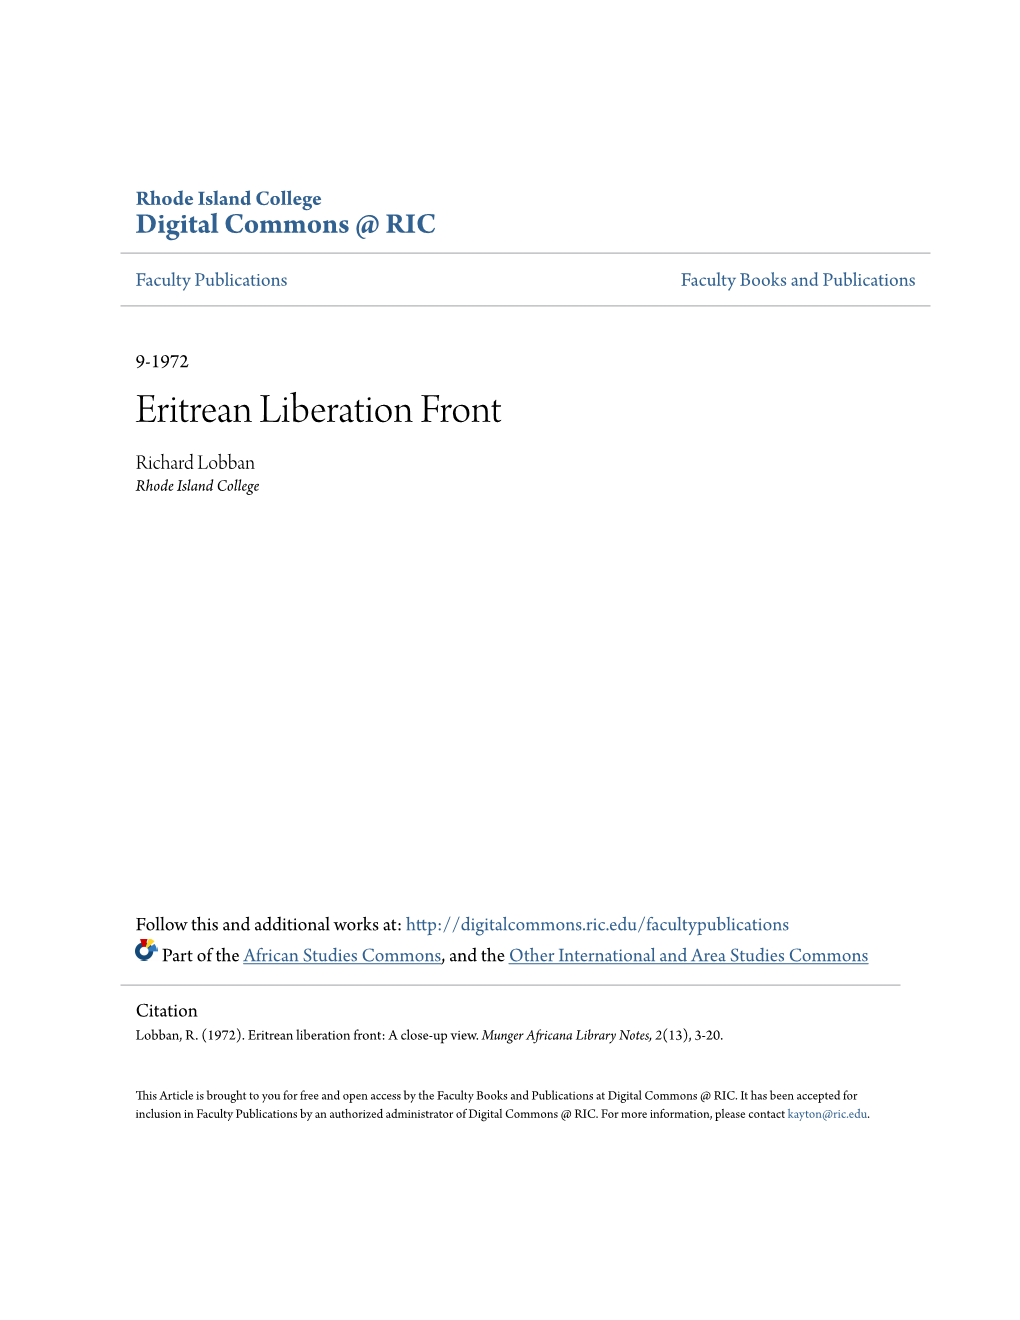 Eritrean Liberation Front Richard Lobban Rhode Island College